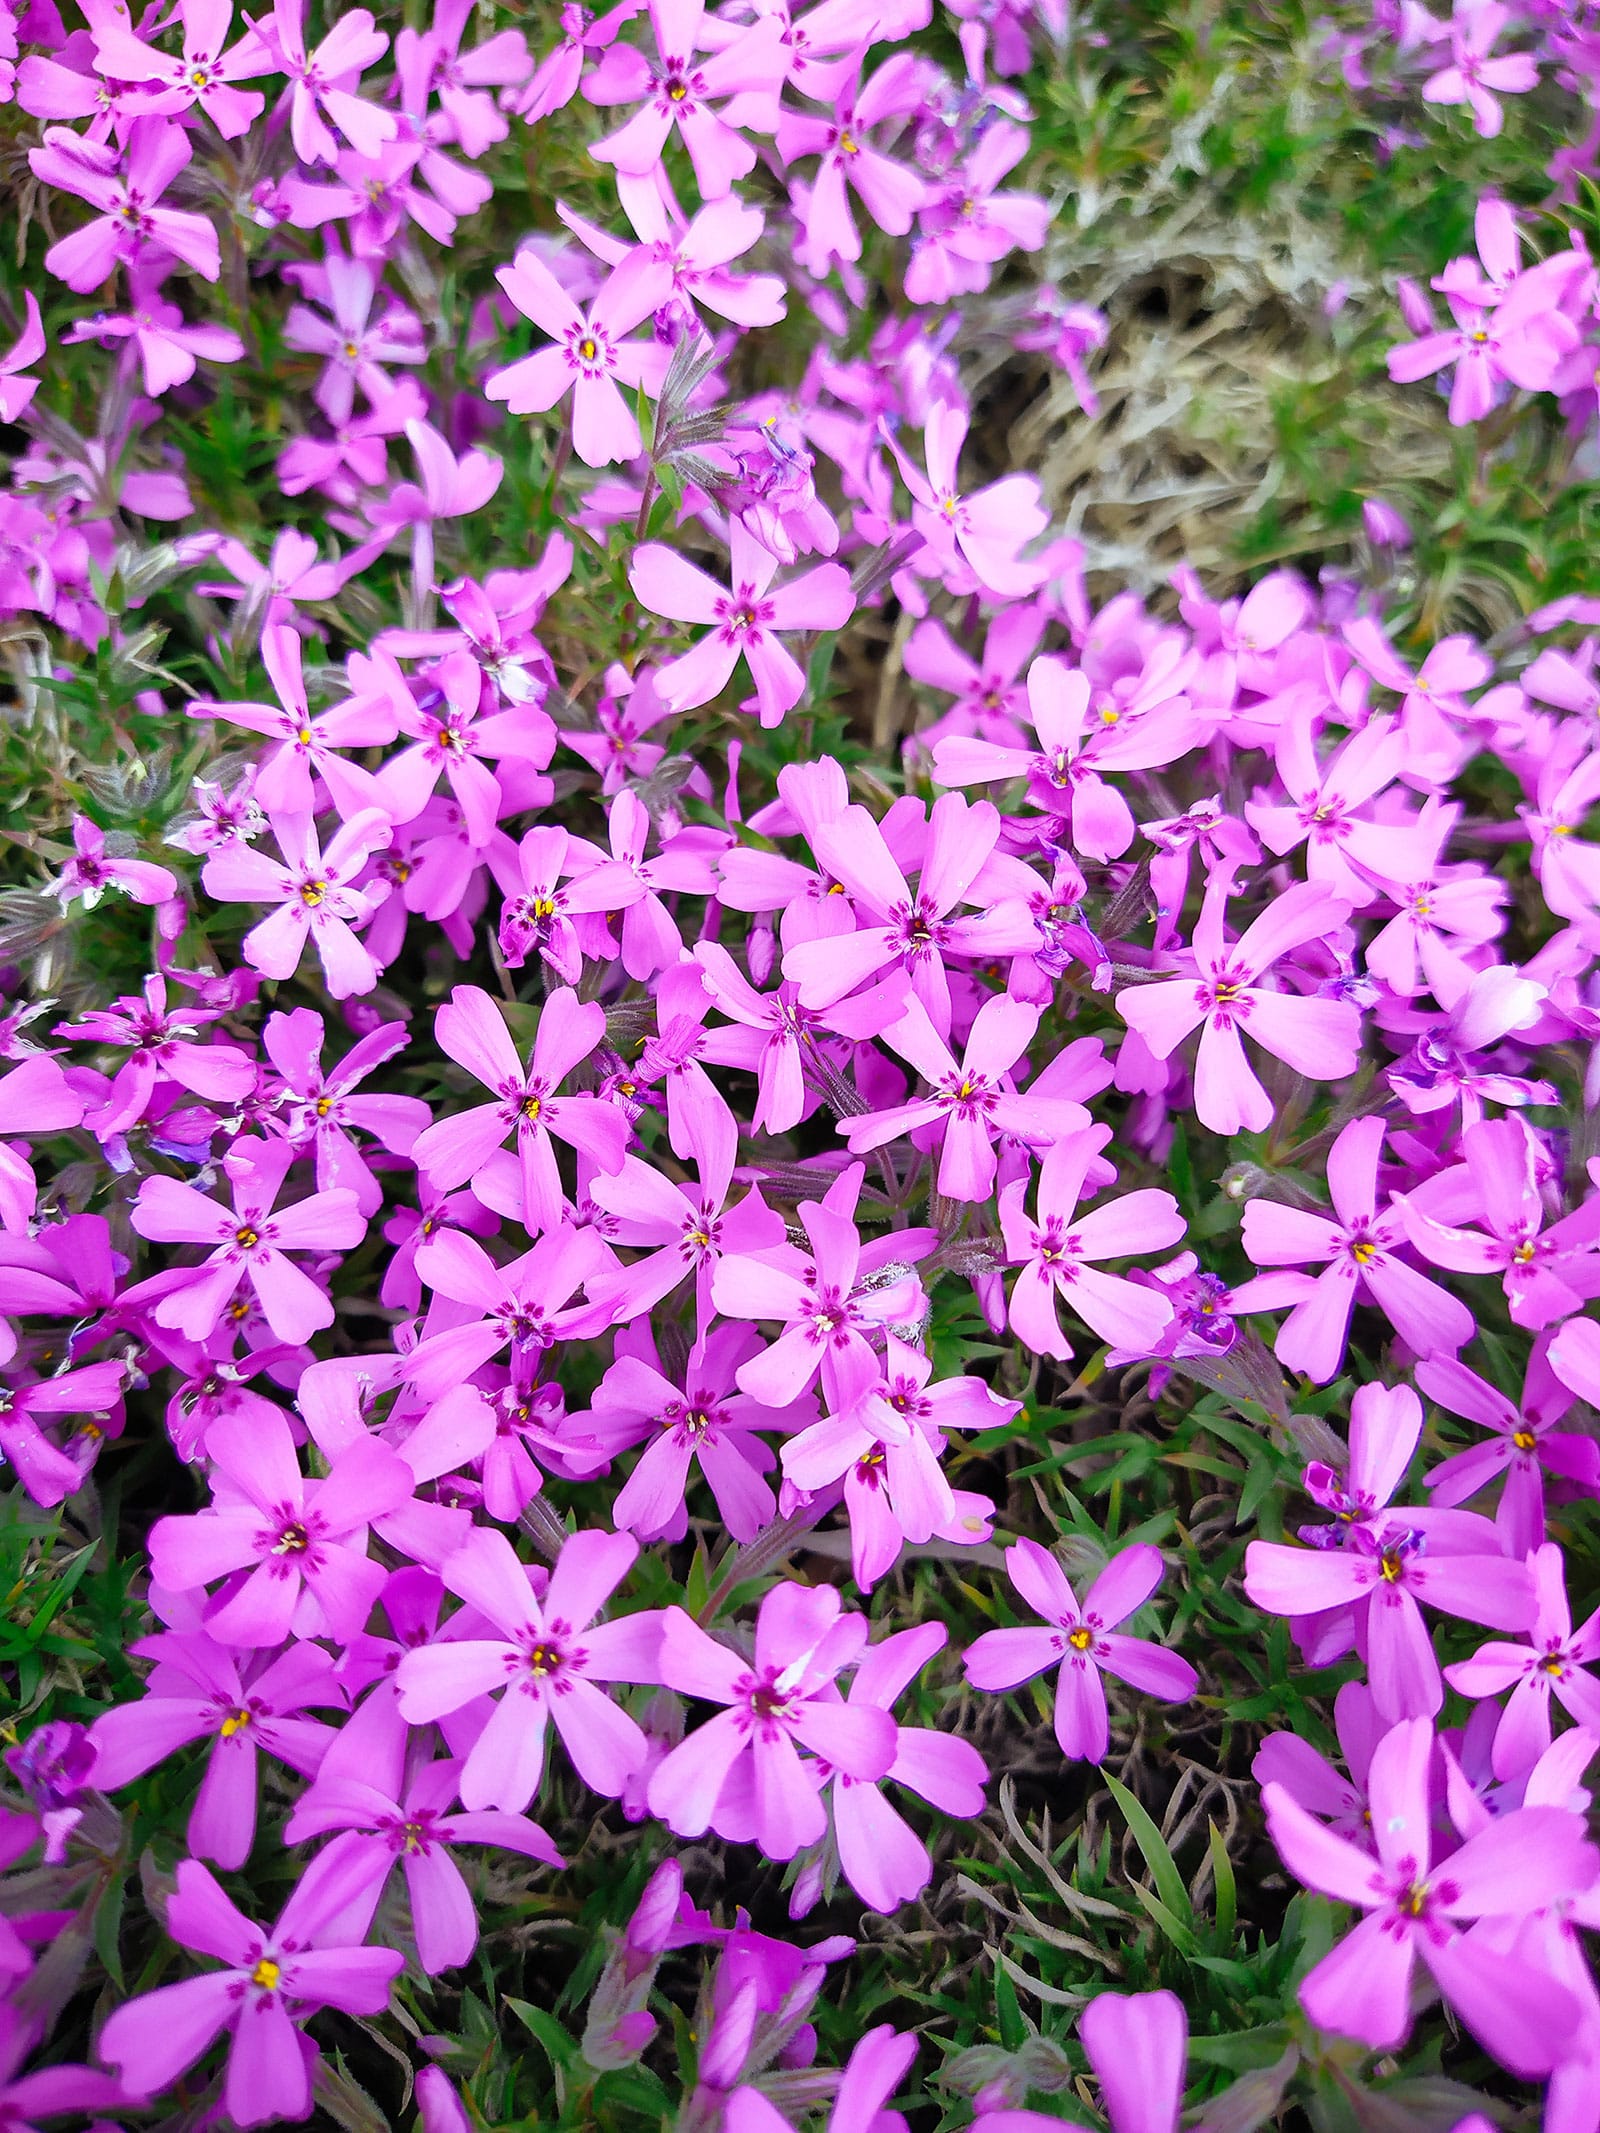 Creeping phox ground cover with pinkish-purple flowers